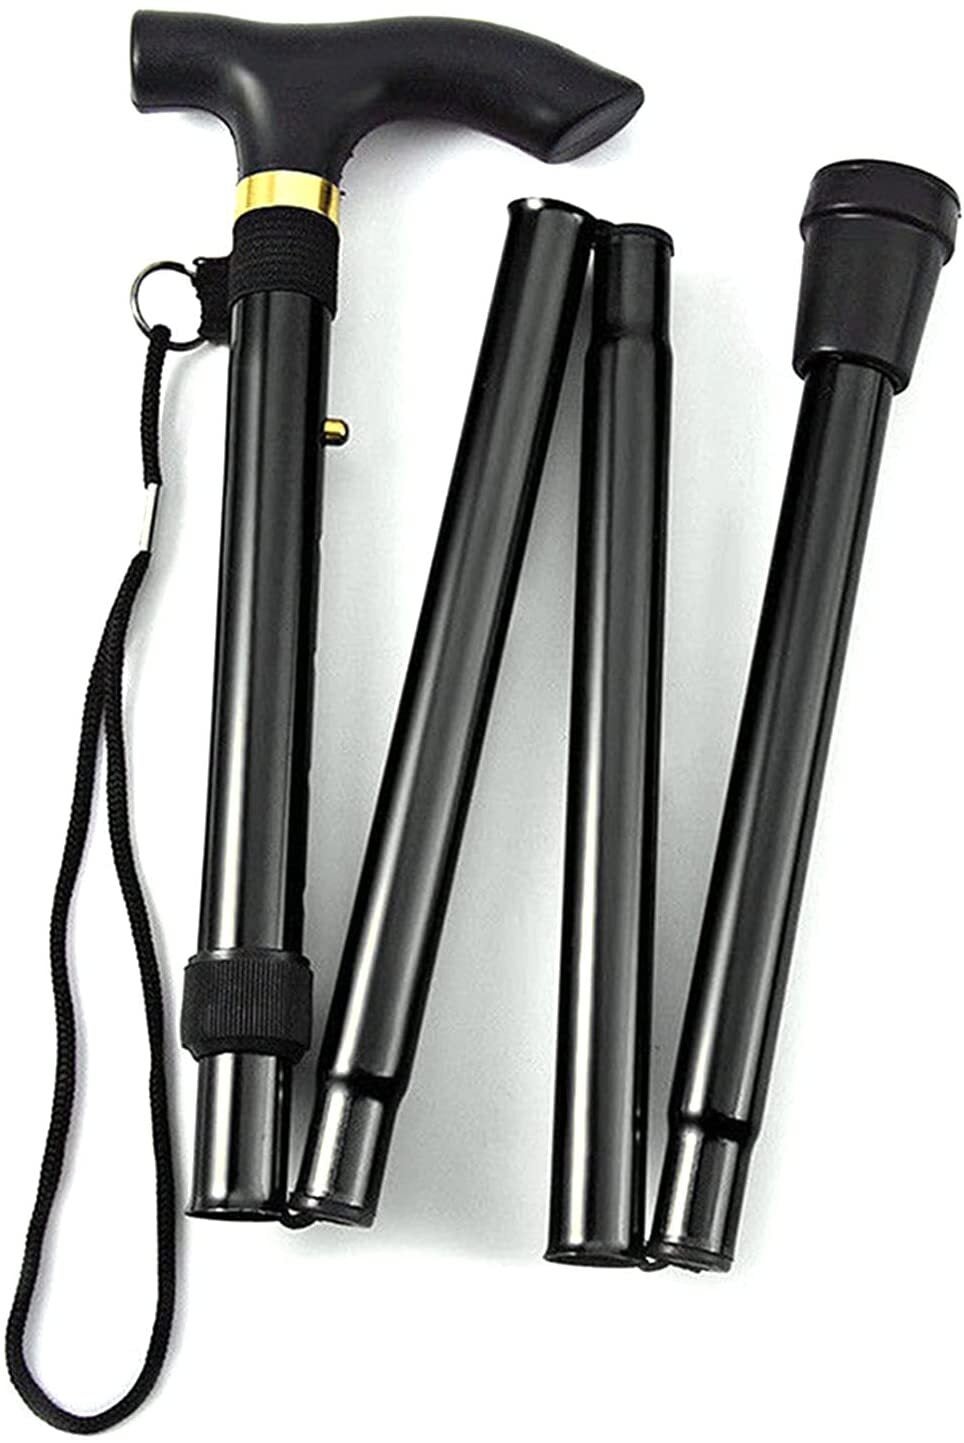 Adjustable Metal WALKING STICK Travel Cane Folding Pole Compact Retractable Hike